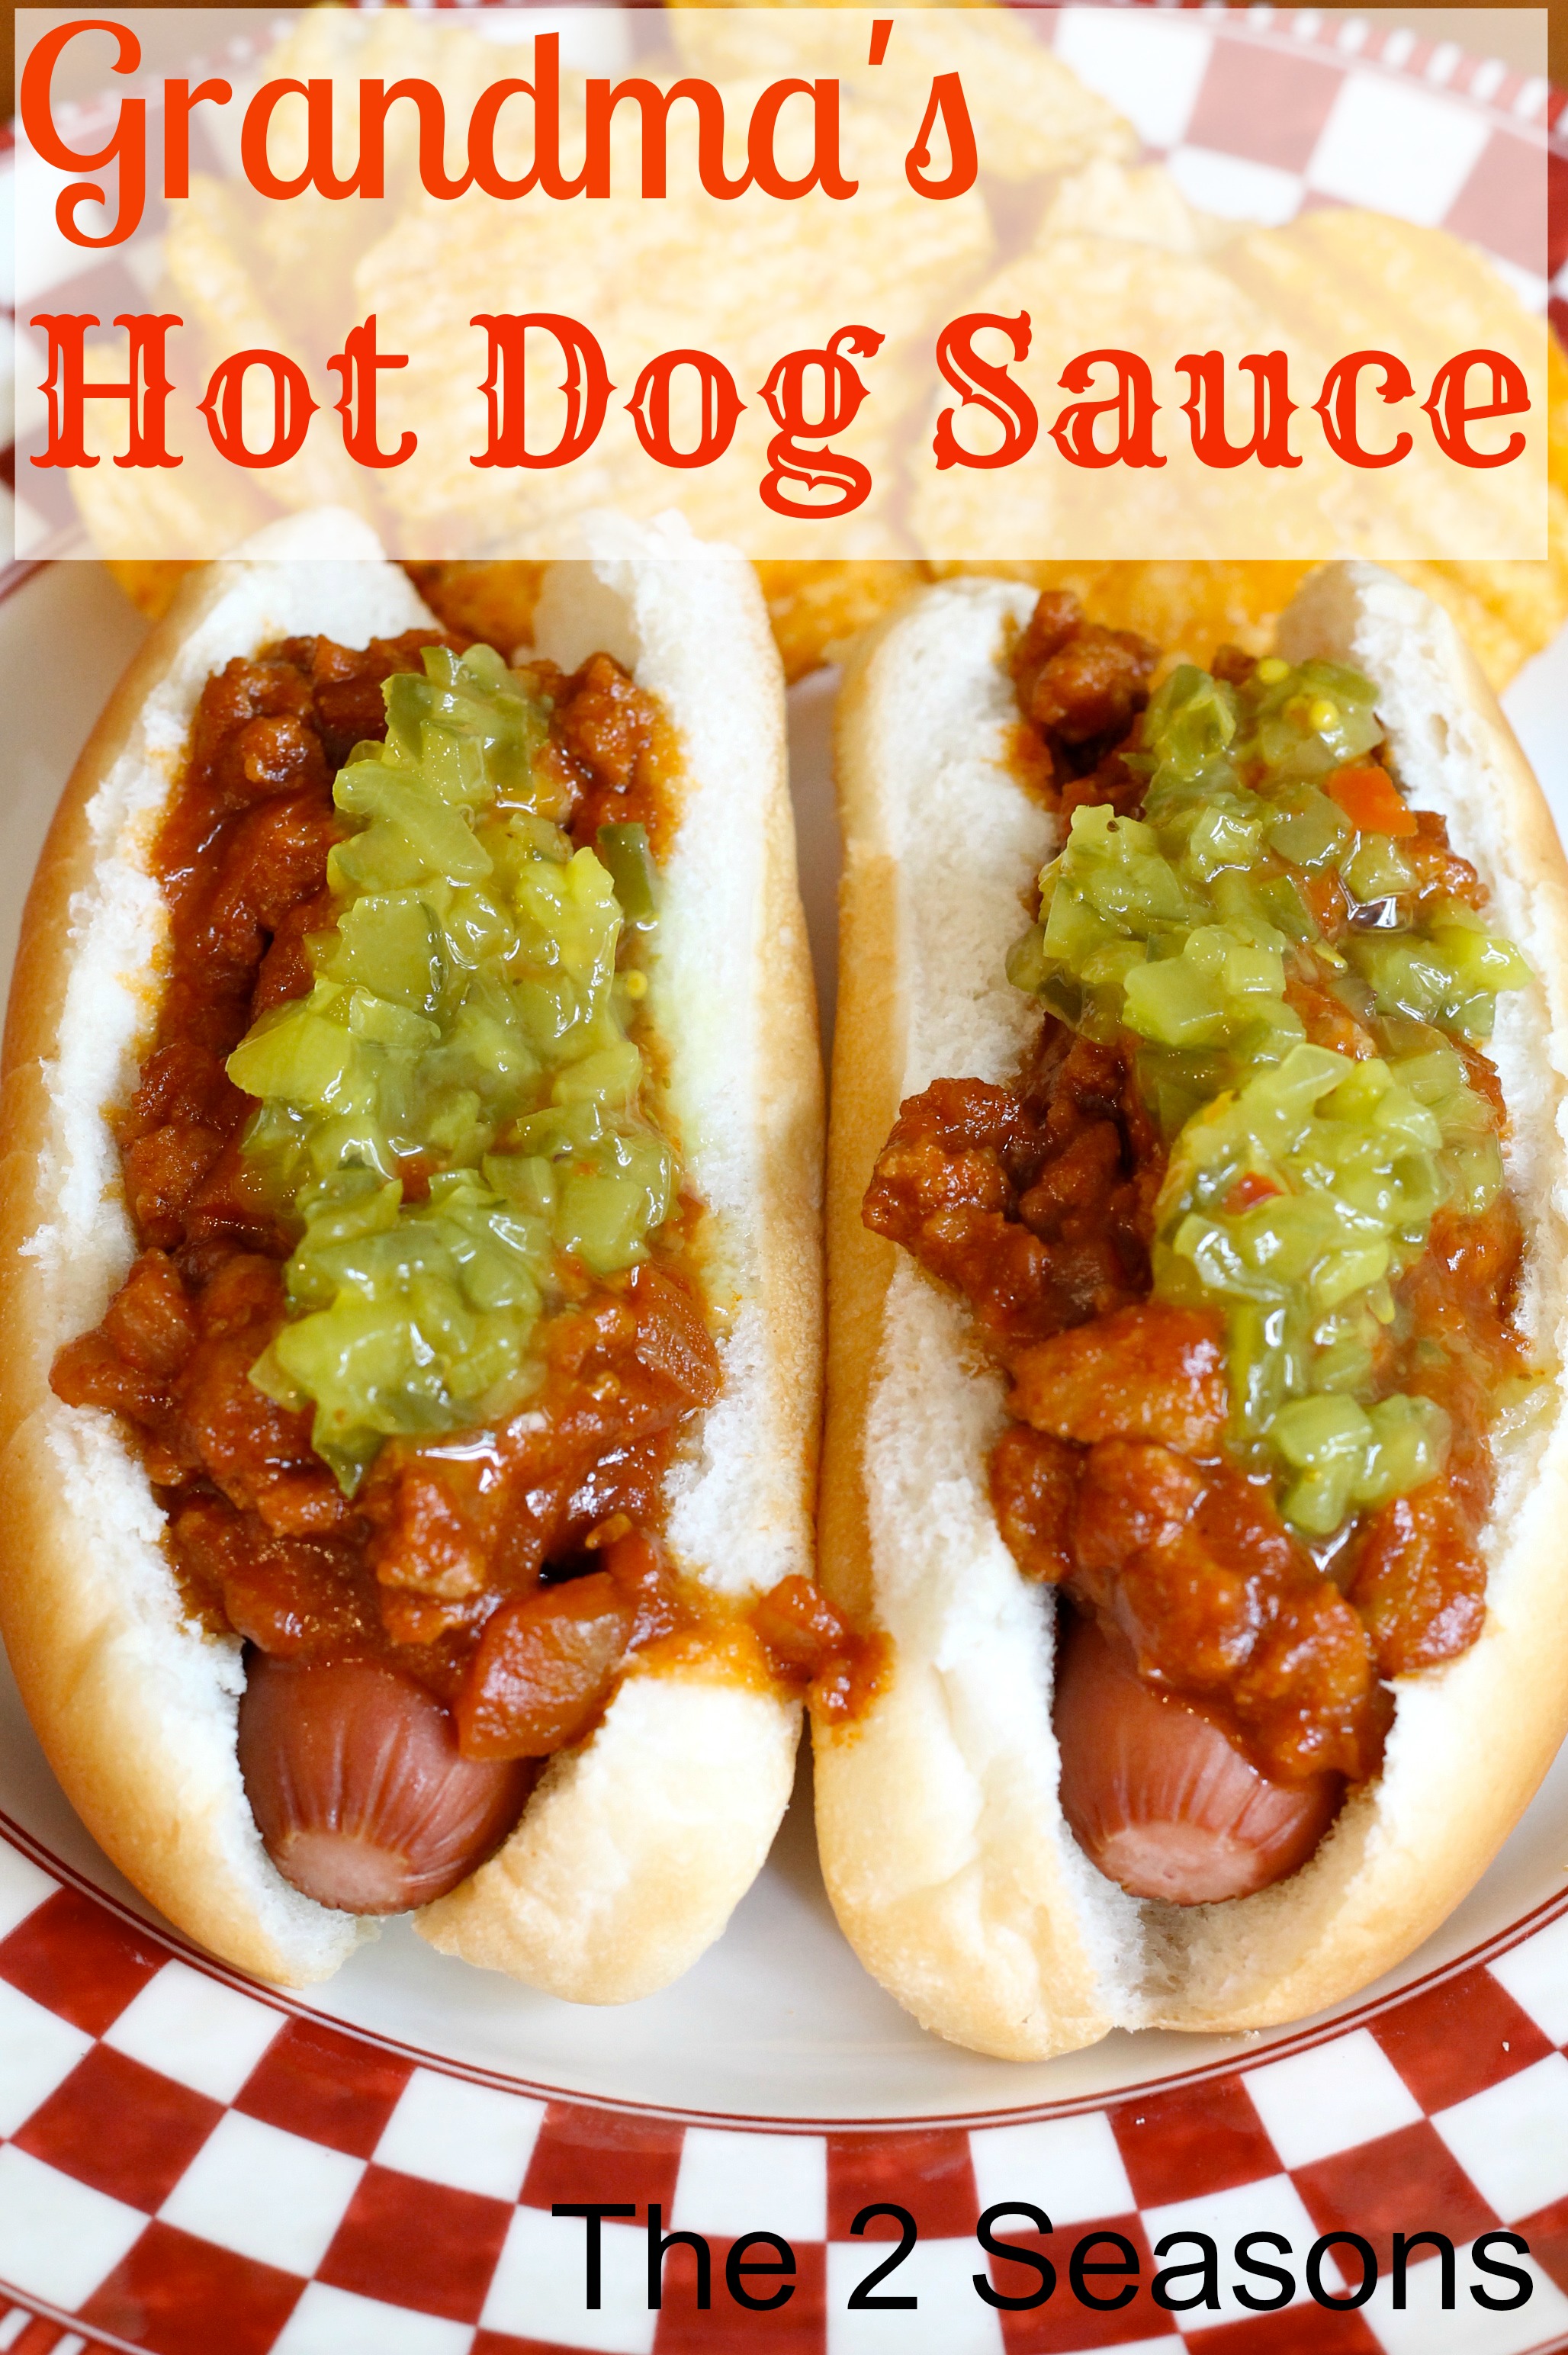 Hot Dog Sauce - Hot Dog Sauce Recipe